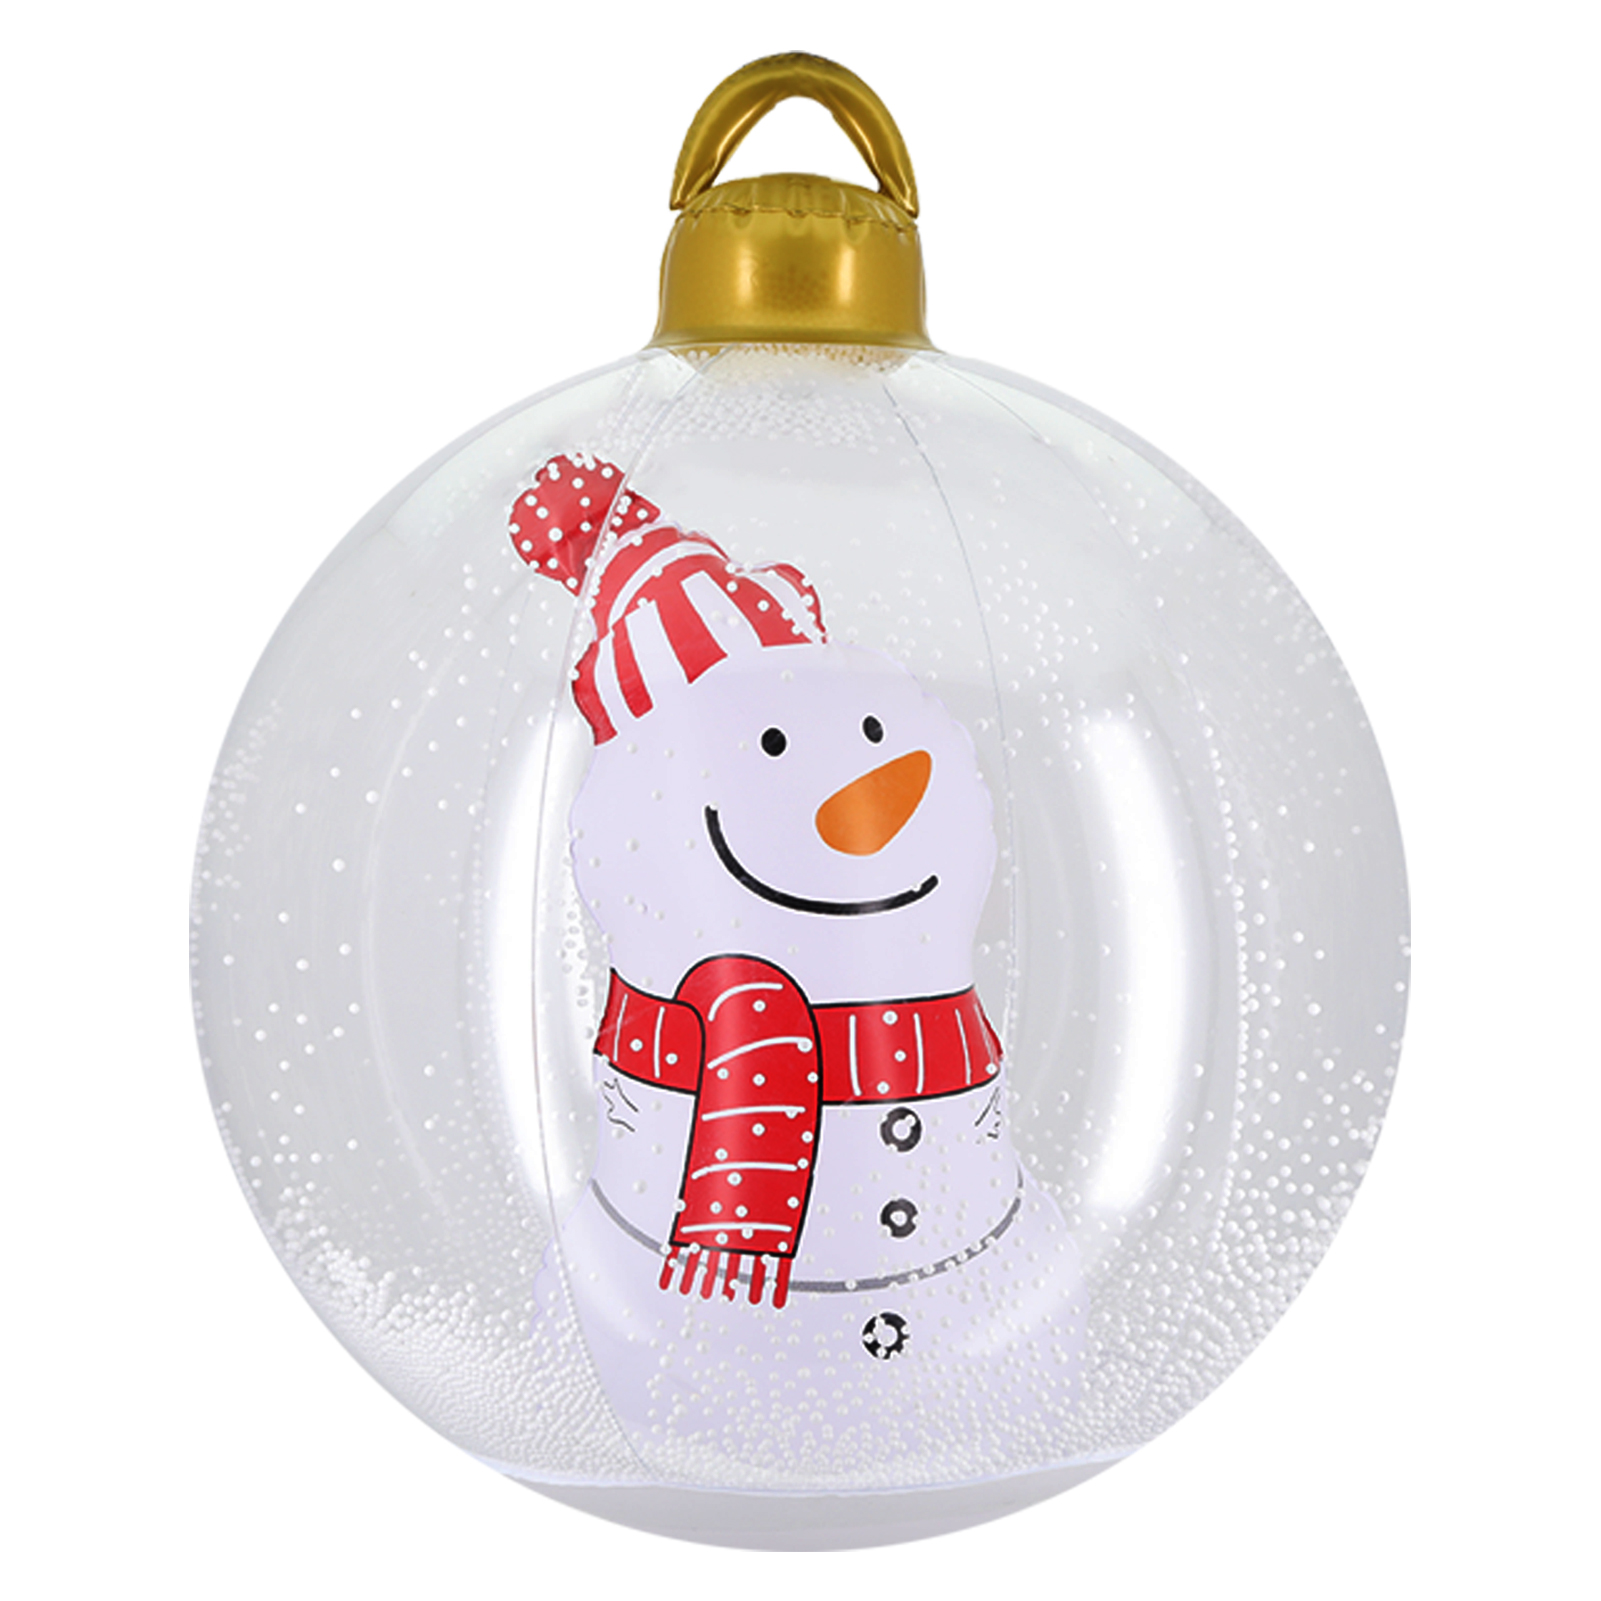 microgood Outdoor Christmas Snowflake Ball Inflatable Waterproof Snowman